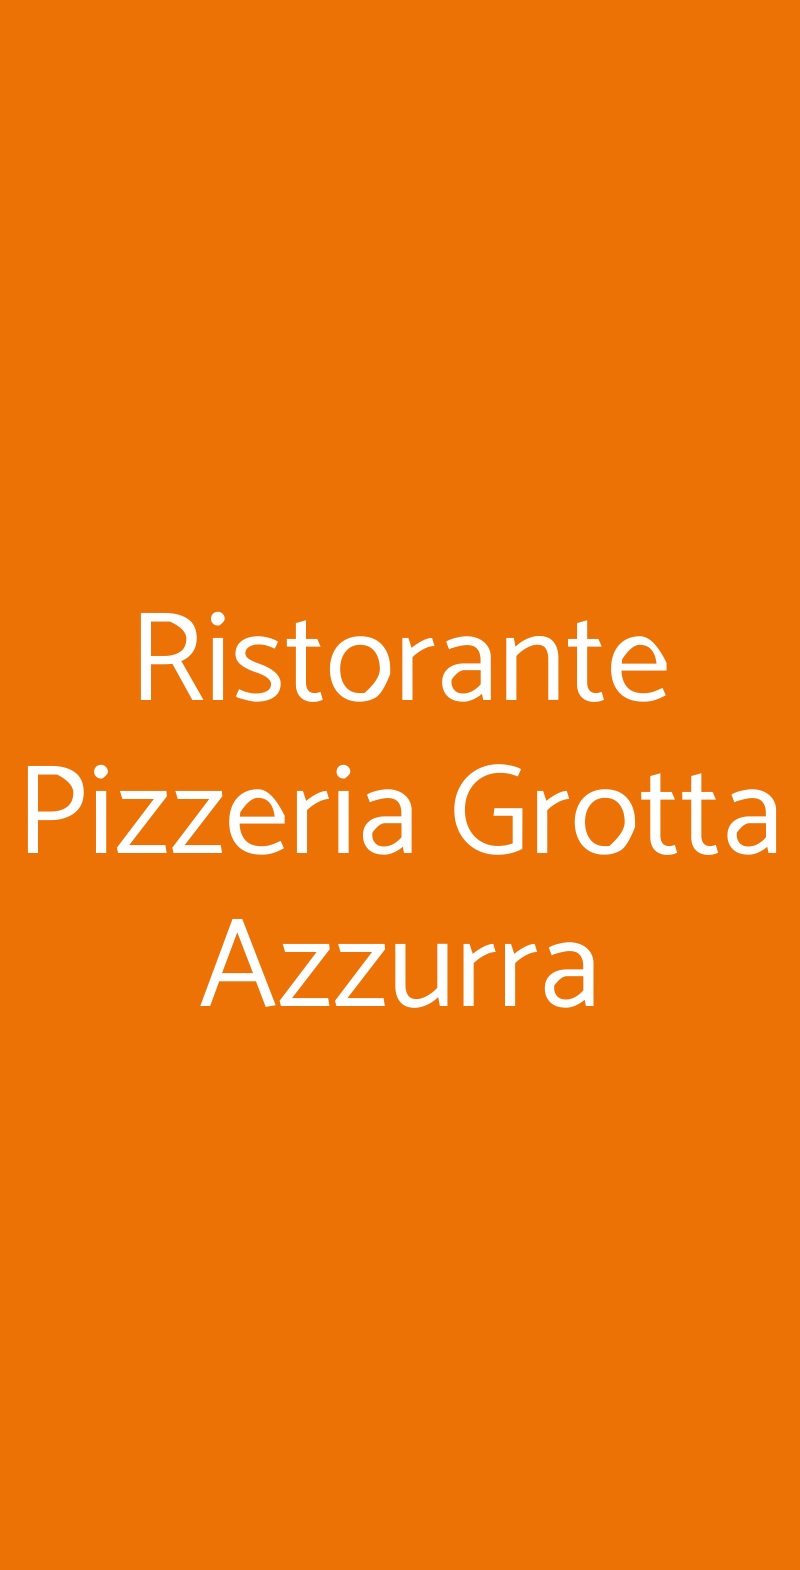 Ristorante Pizzeria Grotta Azzurra Modena menù 1 pagina